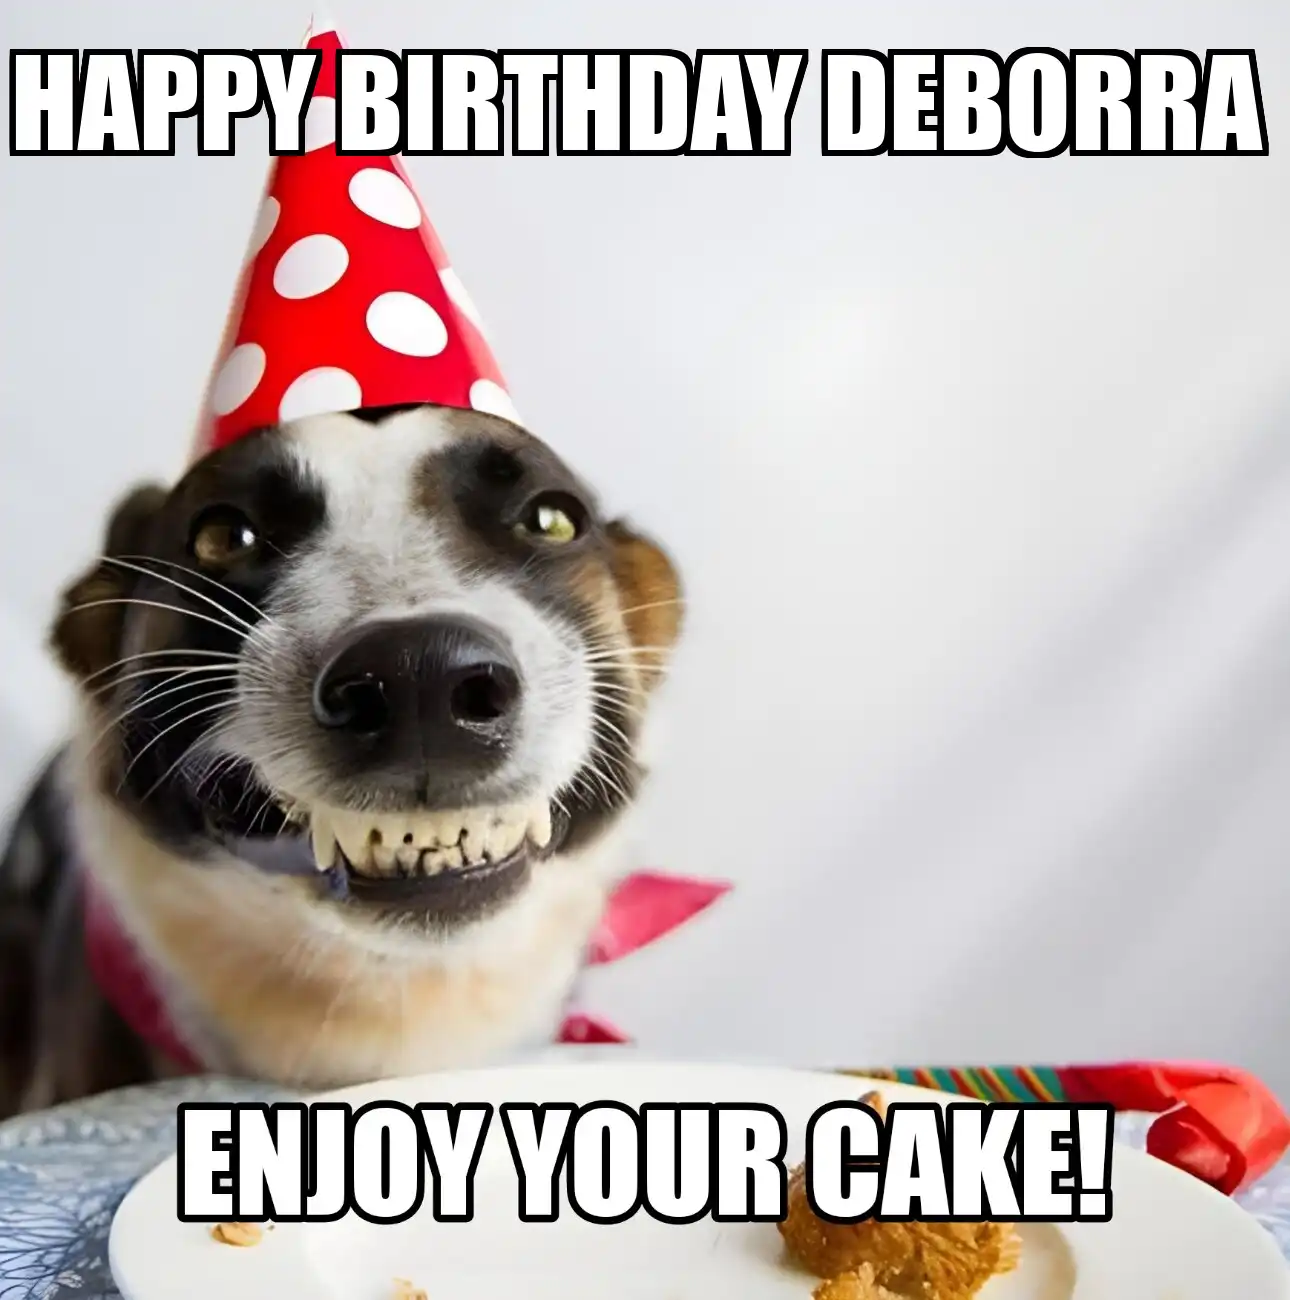 Happy Birthday Deborra Enjoy Your Cake Dog Meme